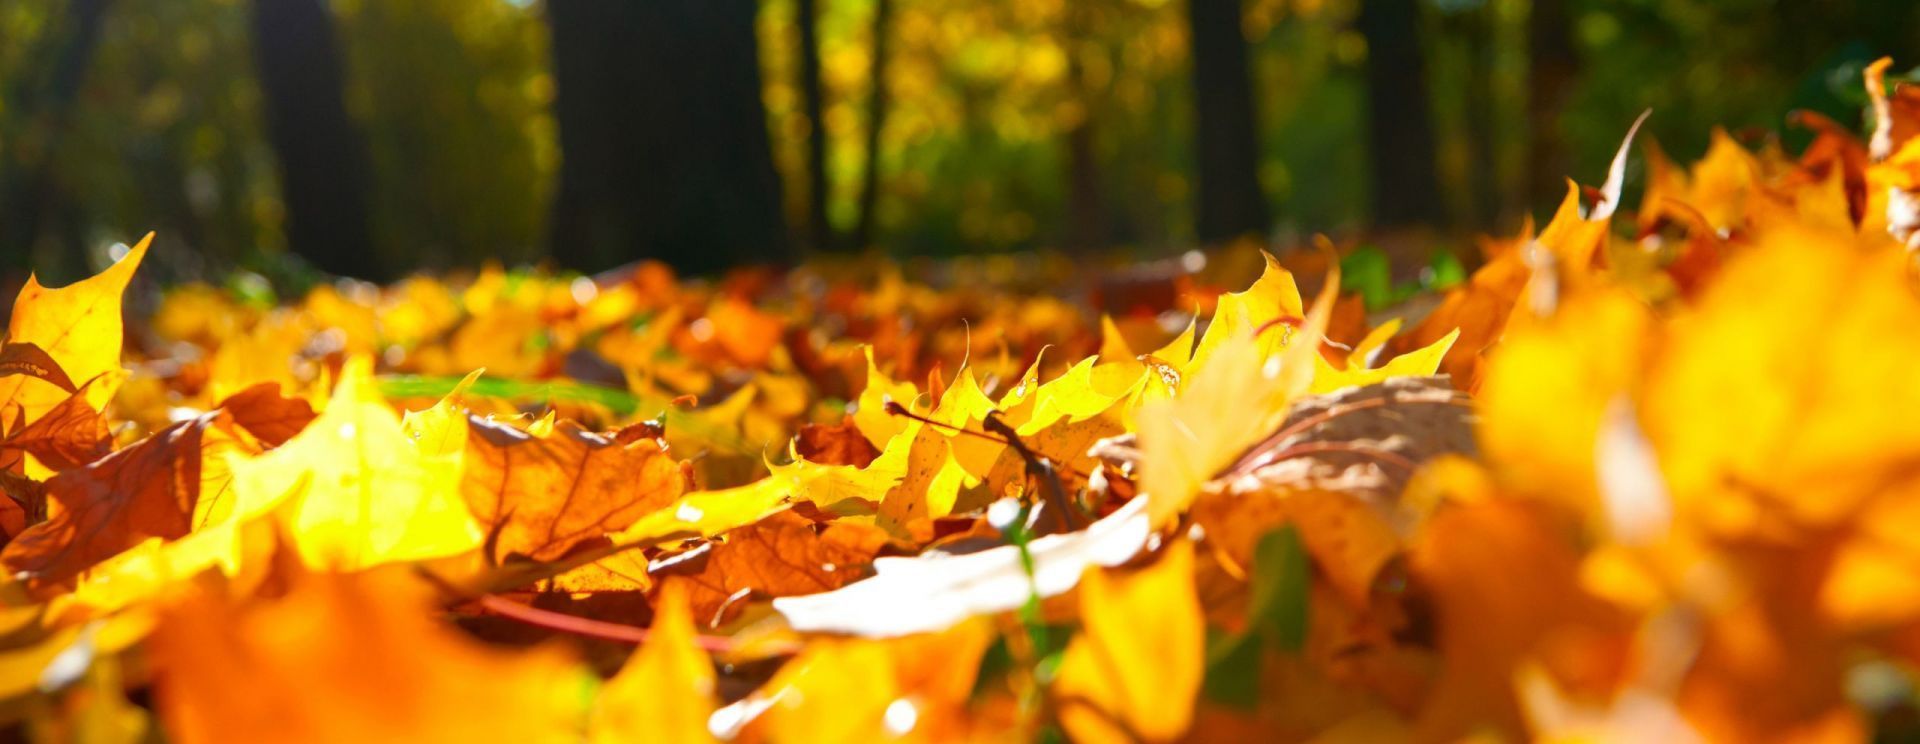 Windows 10 Wallpaper. Leaf compost, Autumn leaves, Autumn activities